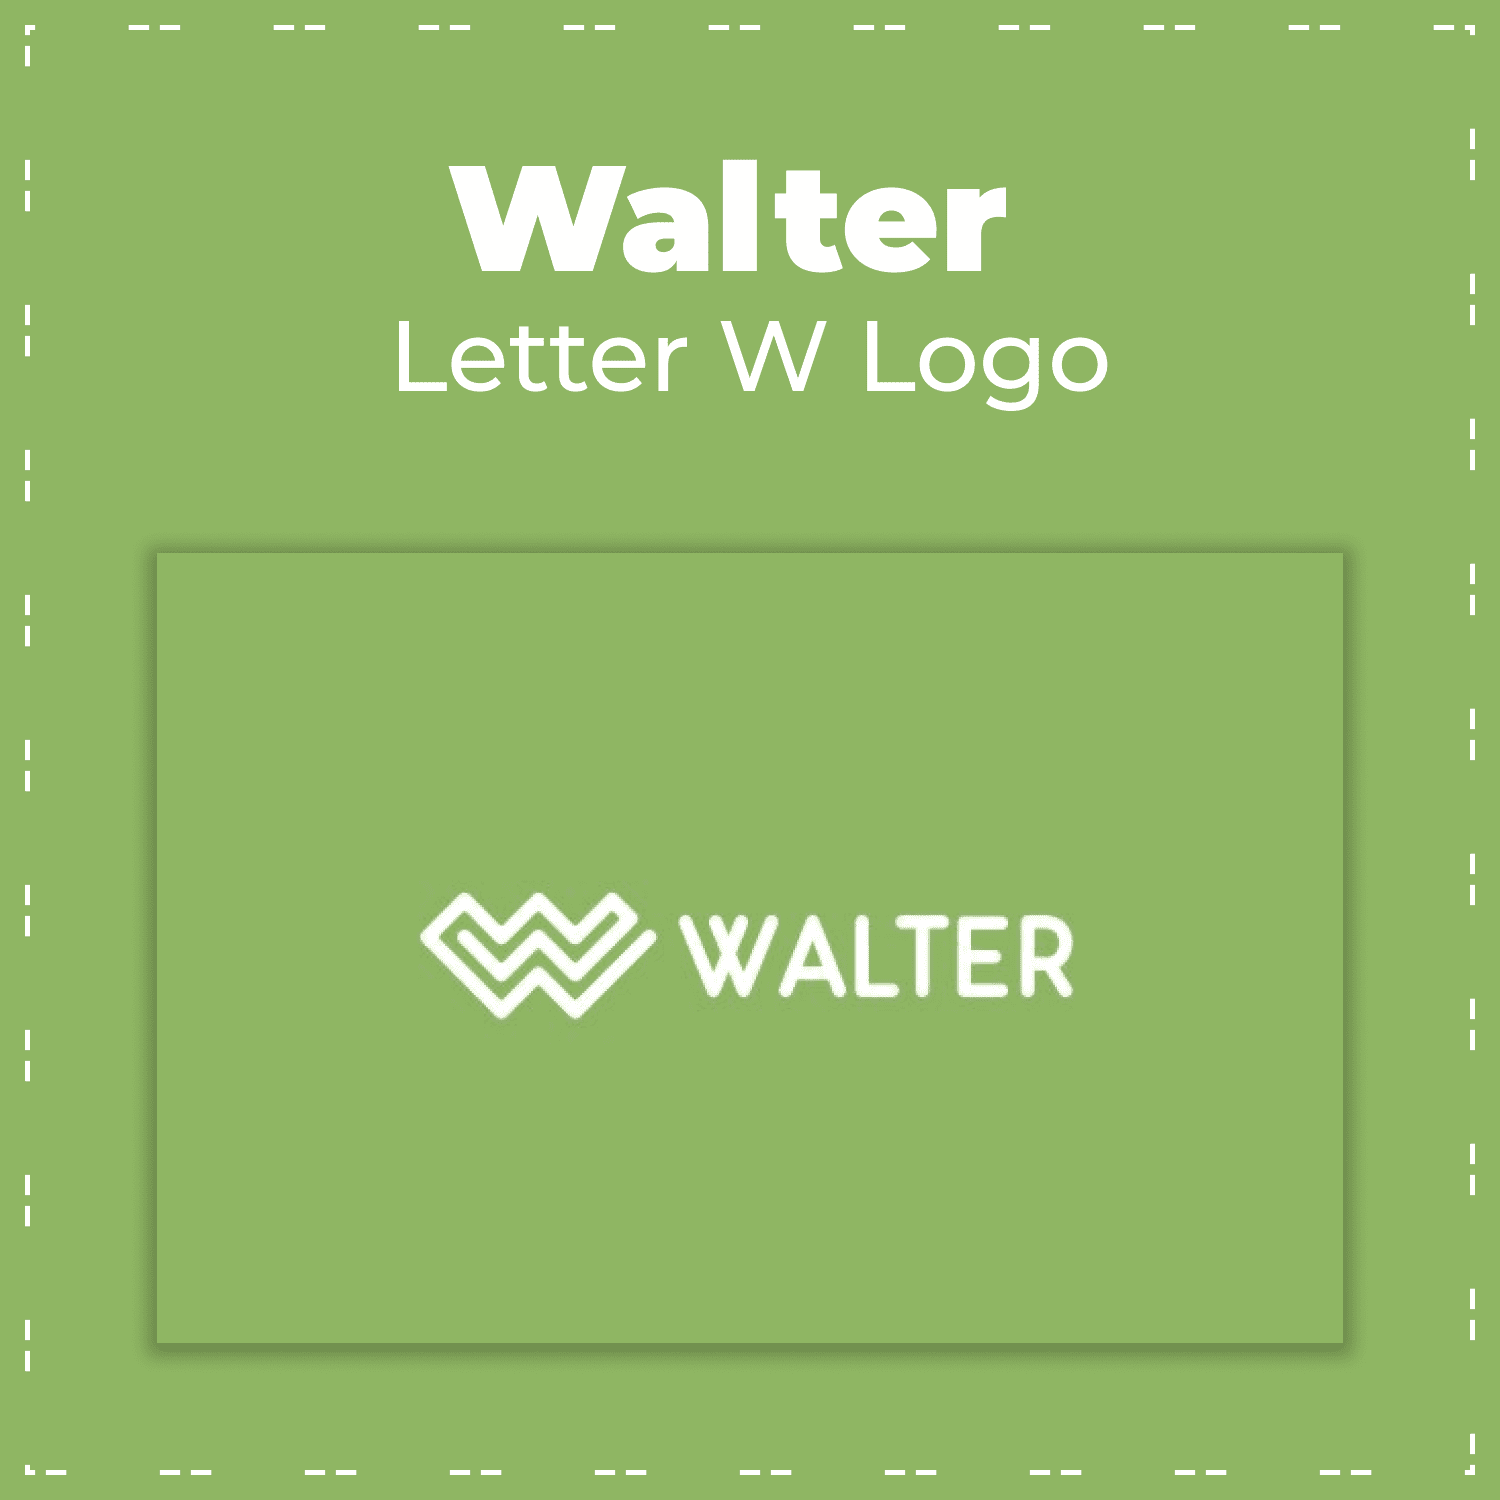 Walter Letter W Logo cover.